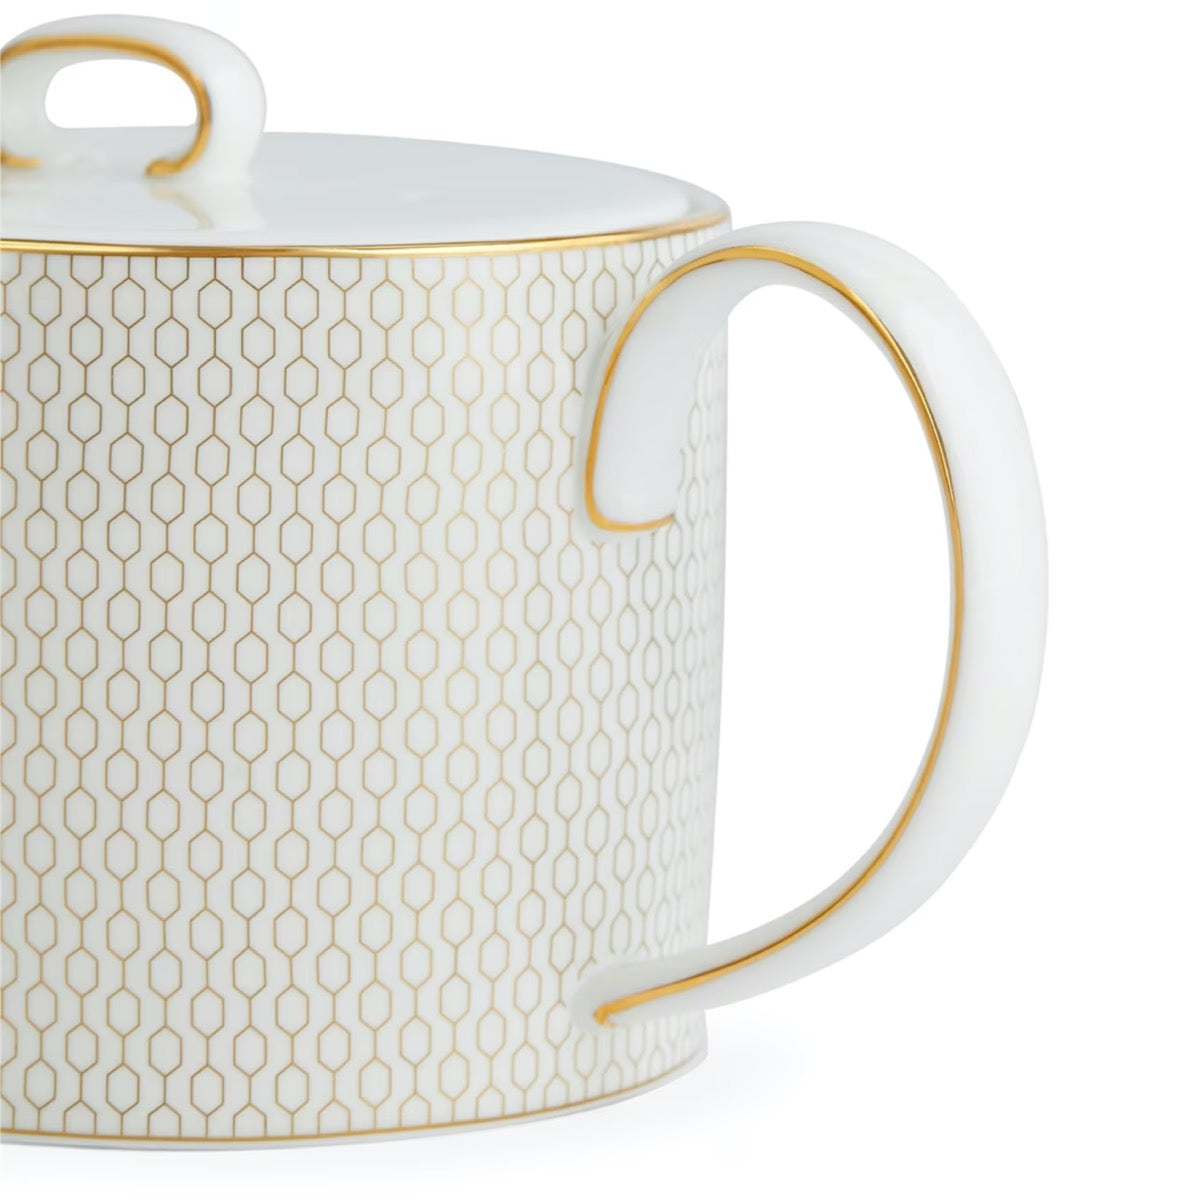 iconic British Teapot